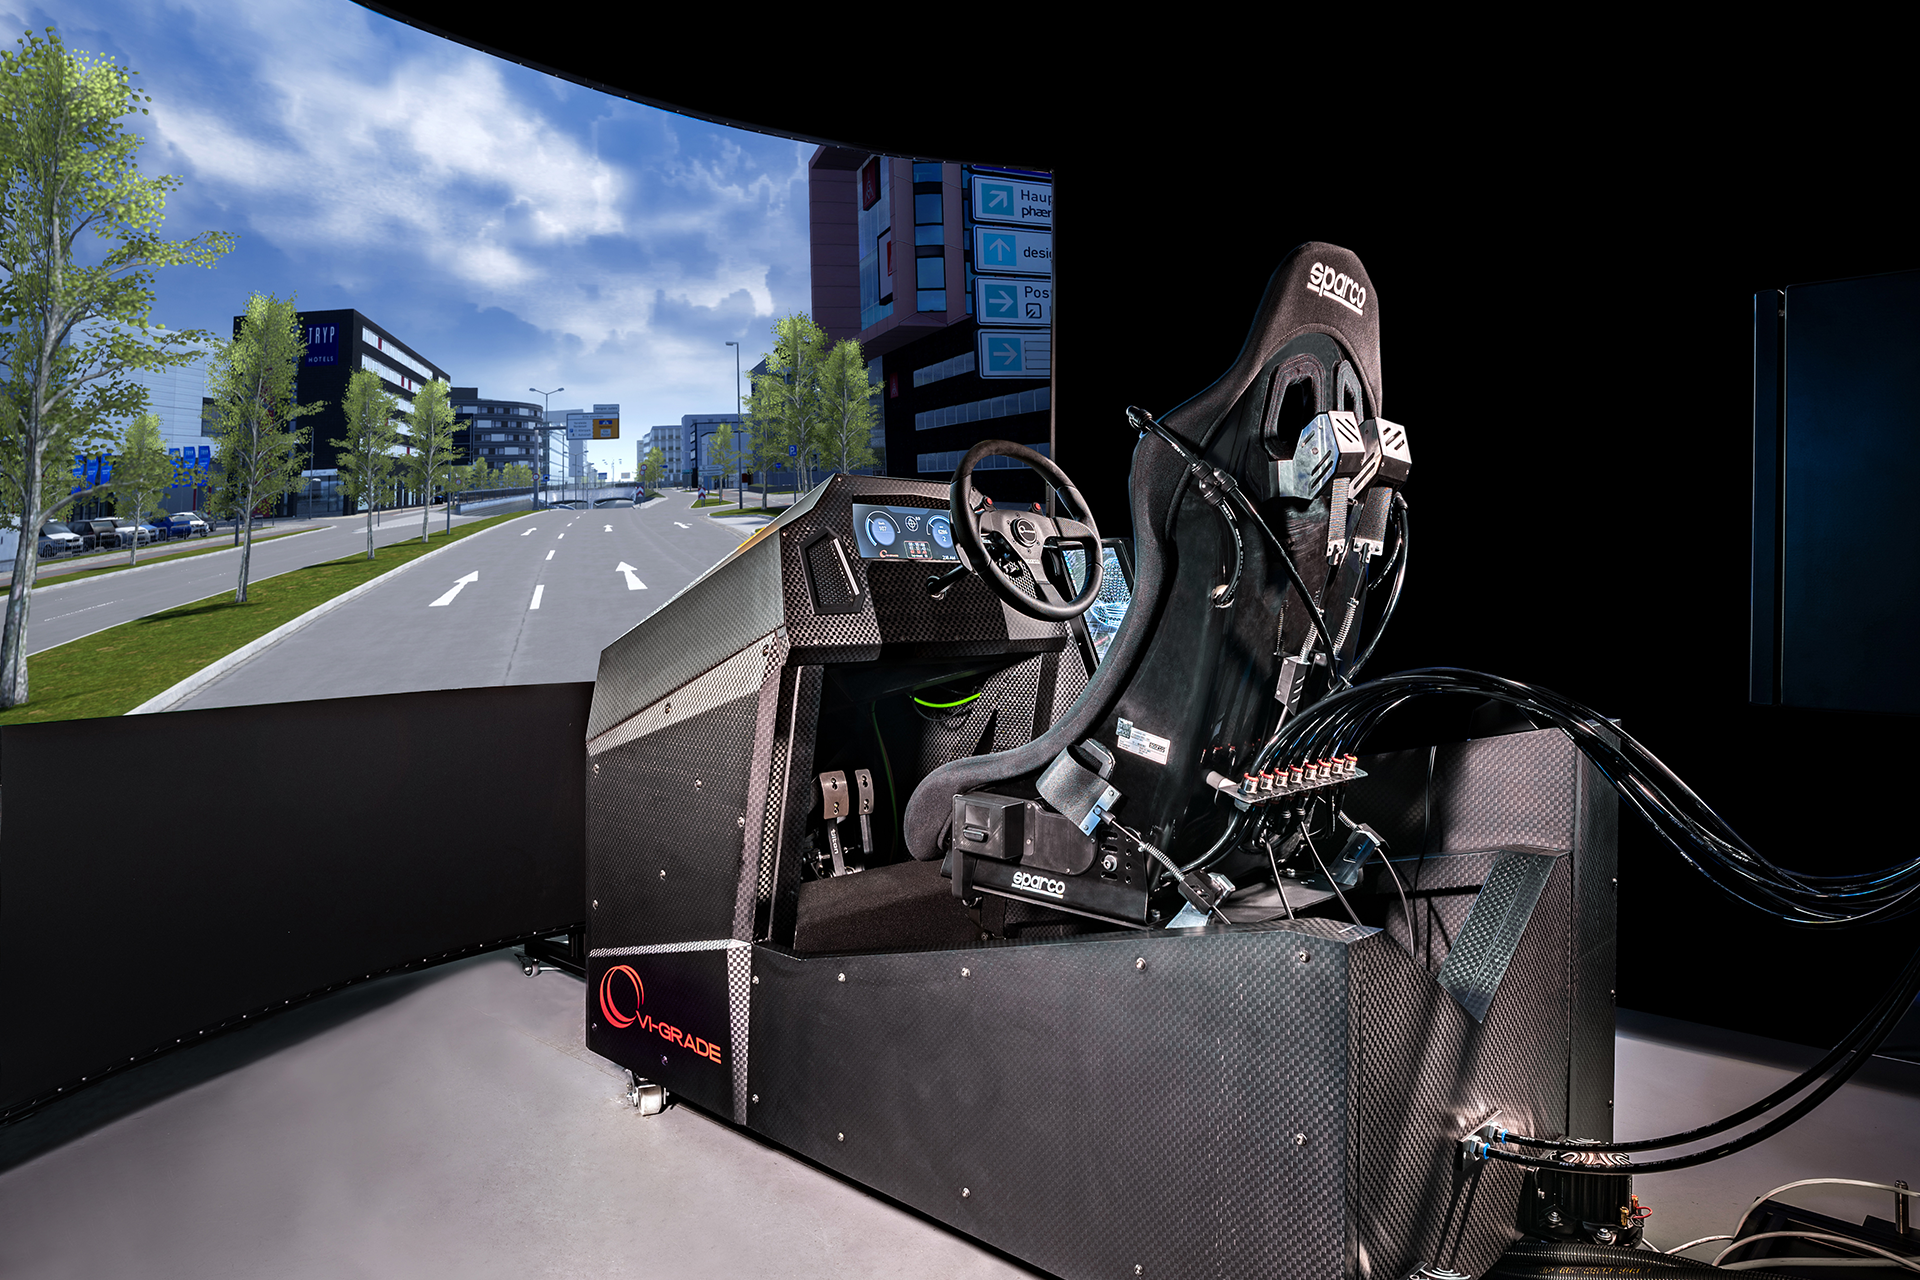 Full Motion Racing Simulator UK - Motion Simulation